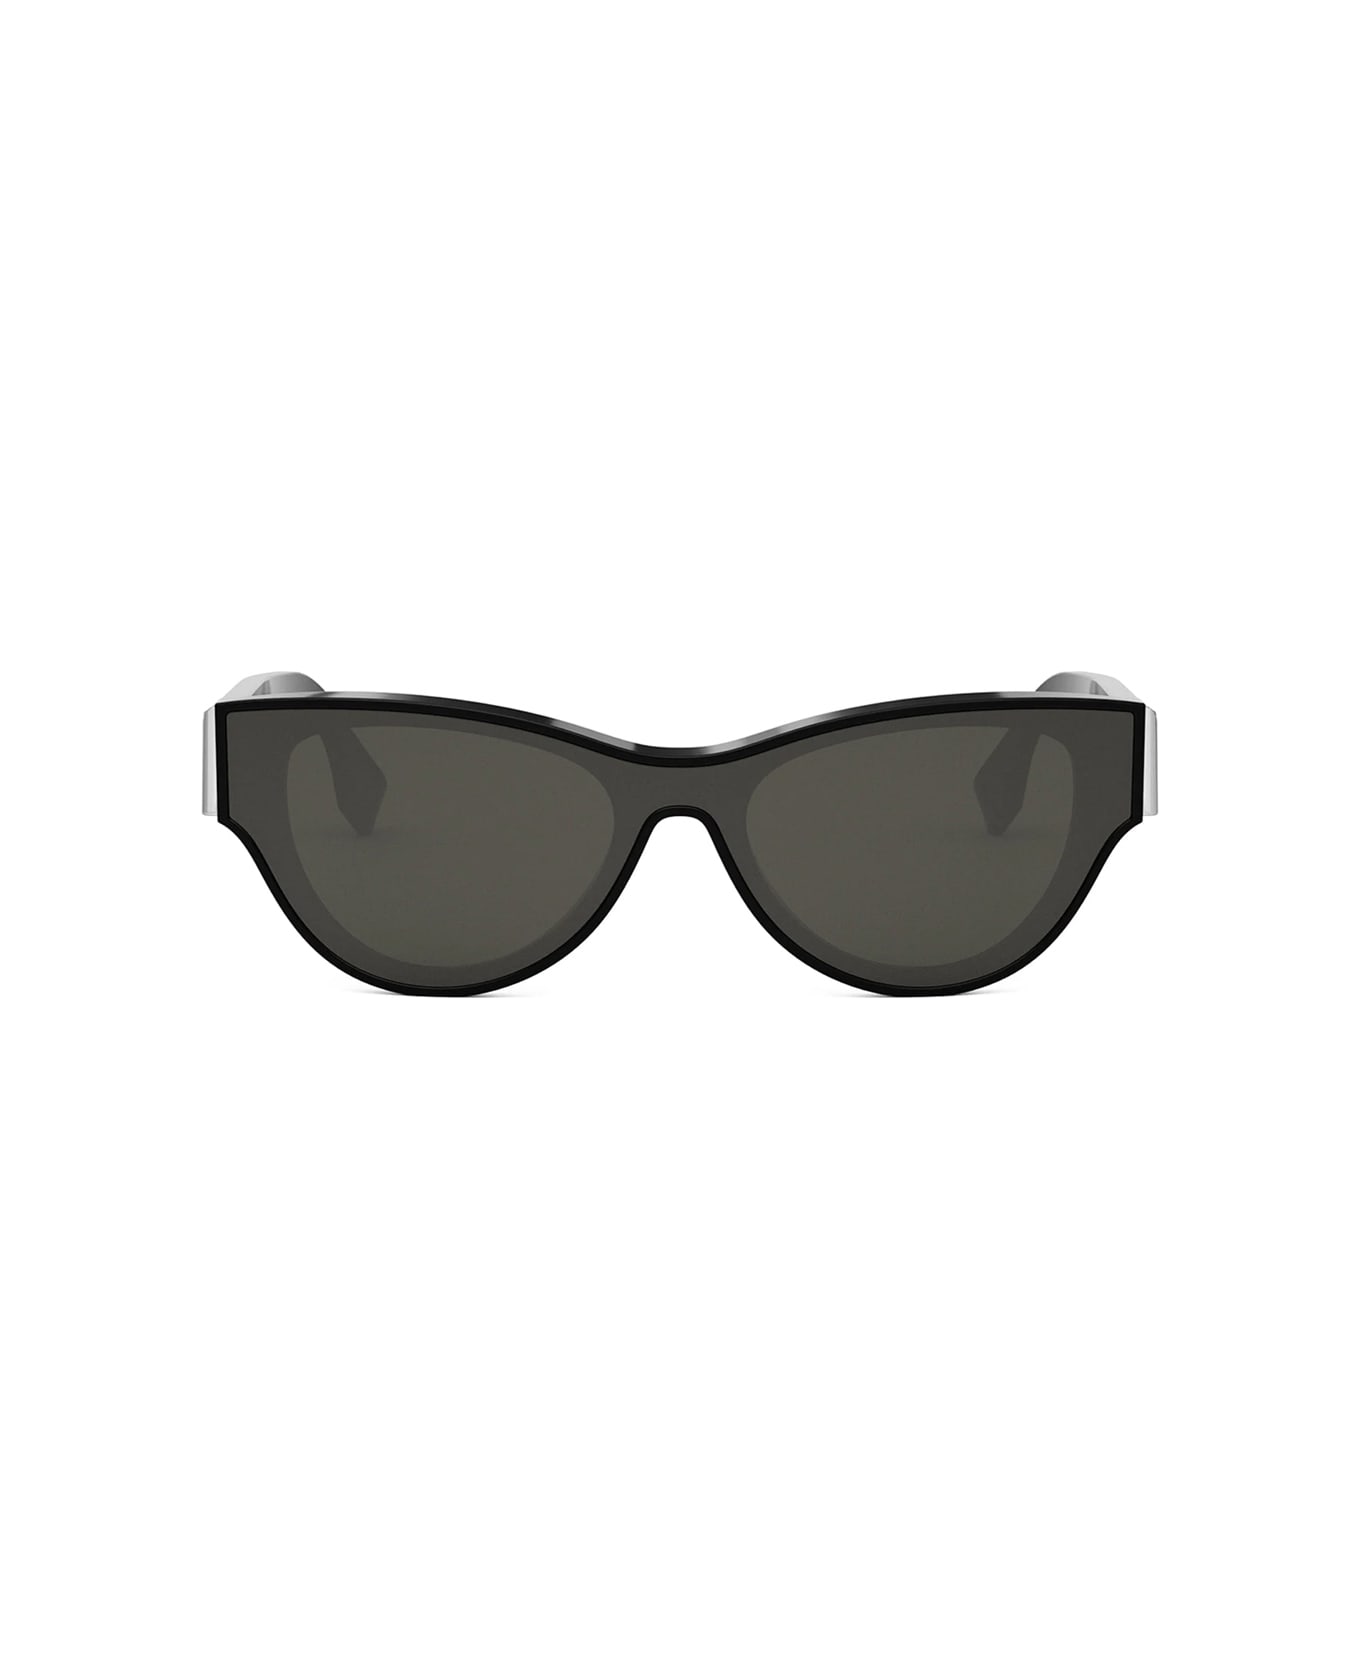 Fendi Eyewear Fe40135i 01a Sunglasses - Nero